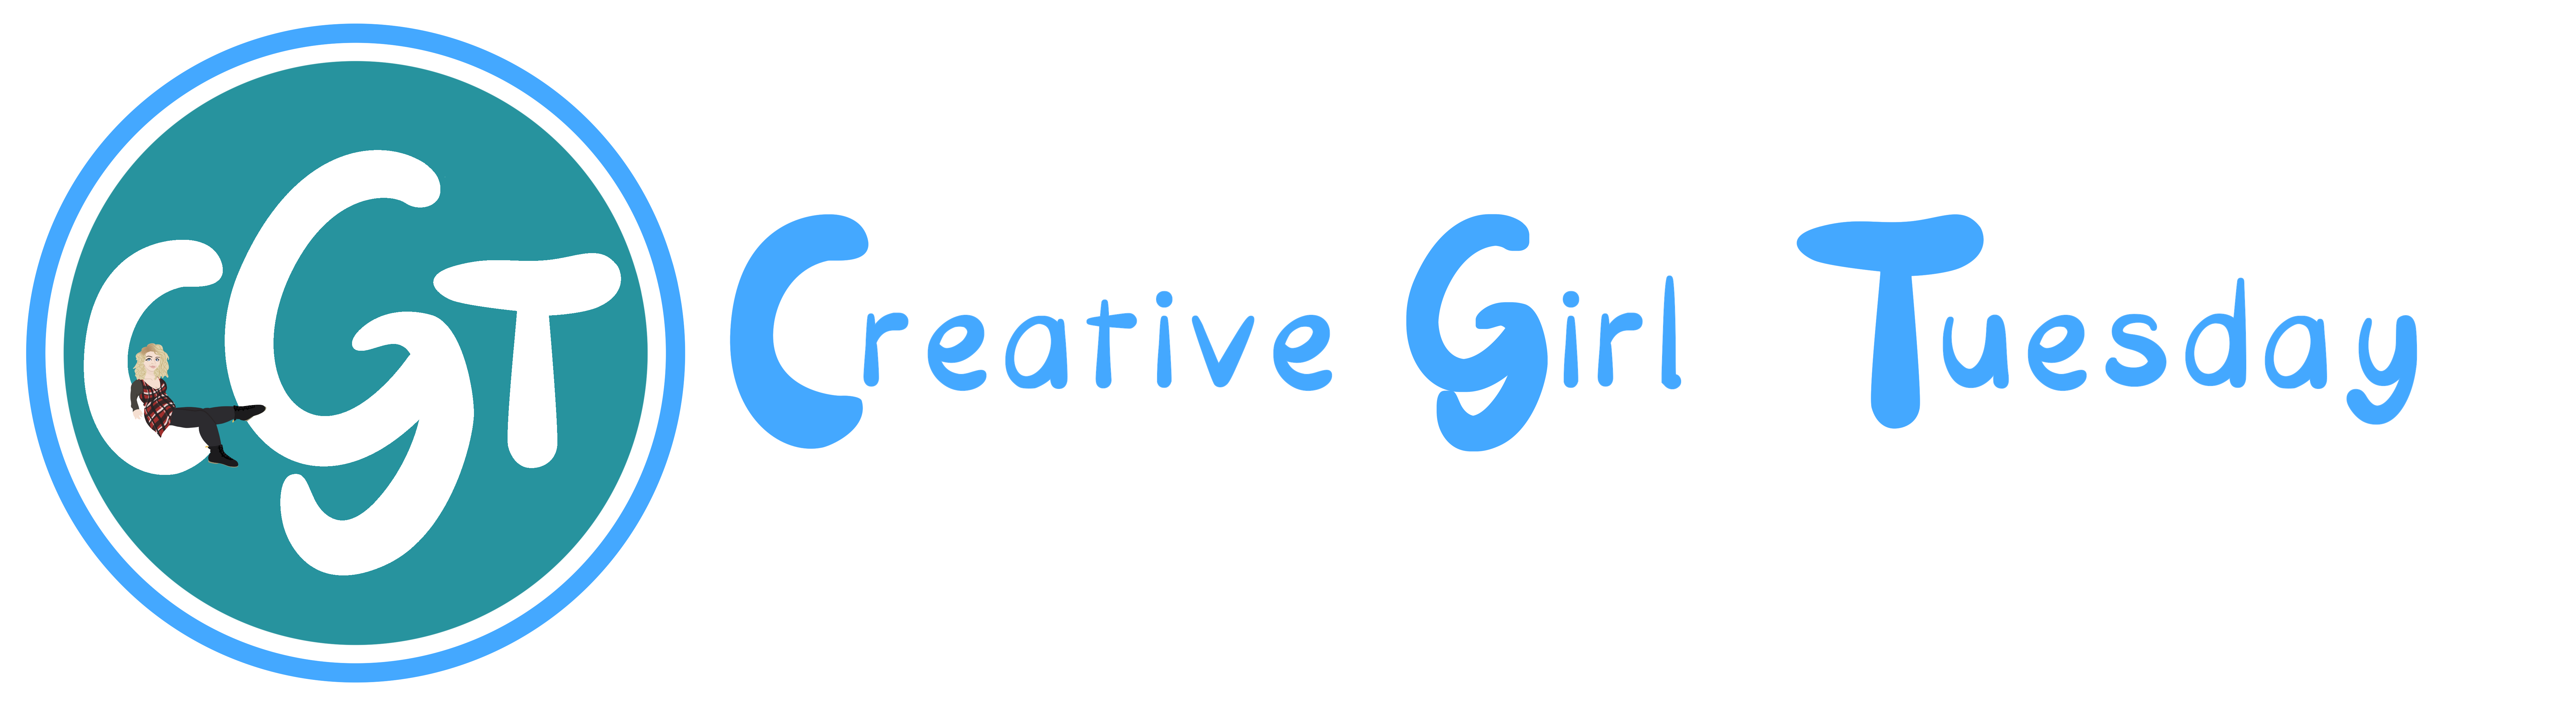 Creative Girl Tuesday